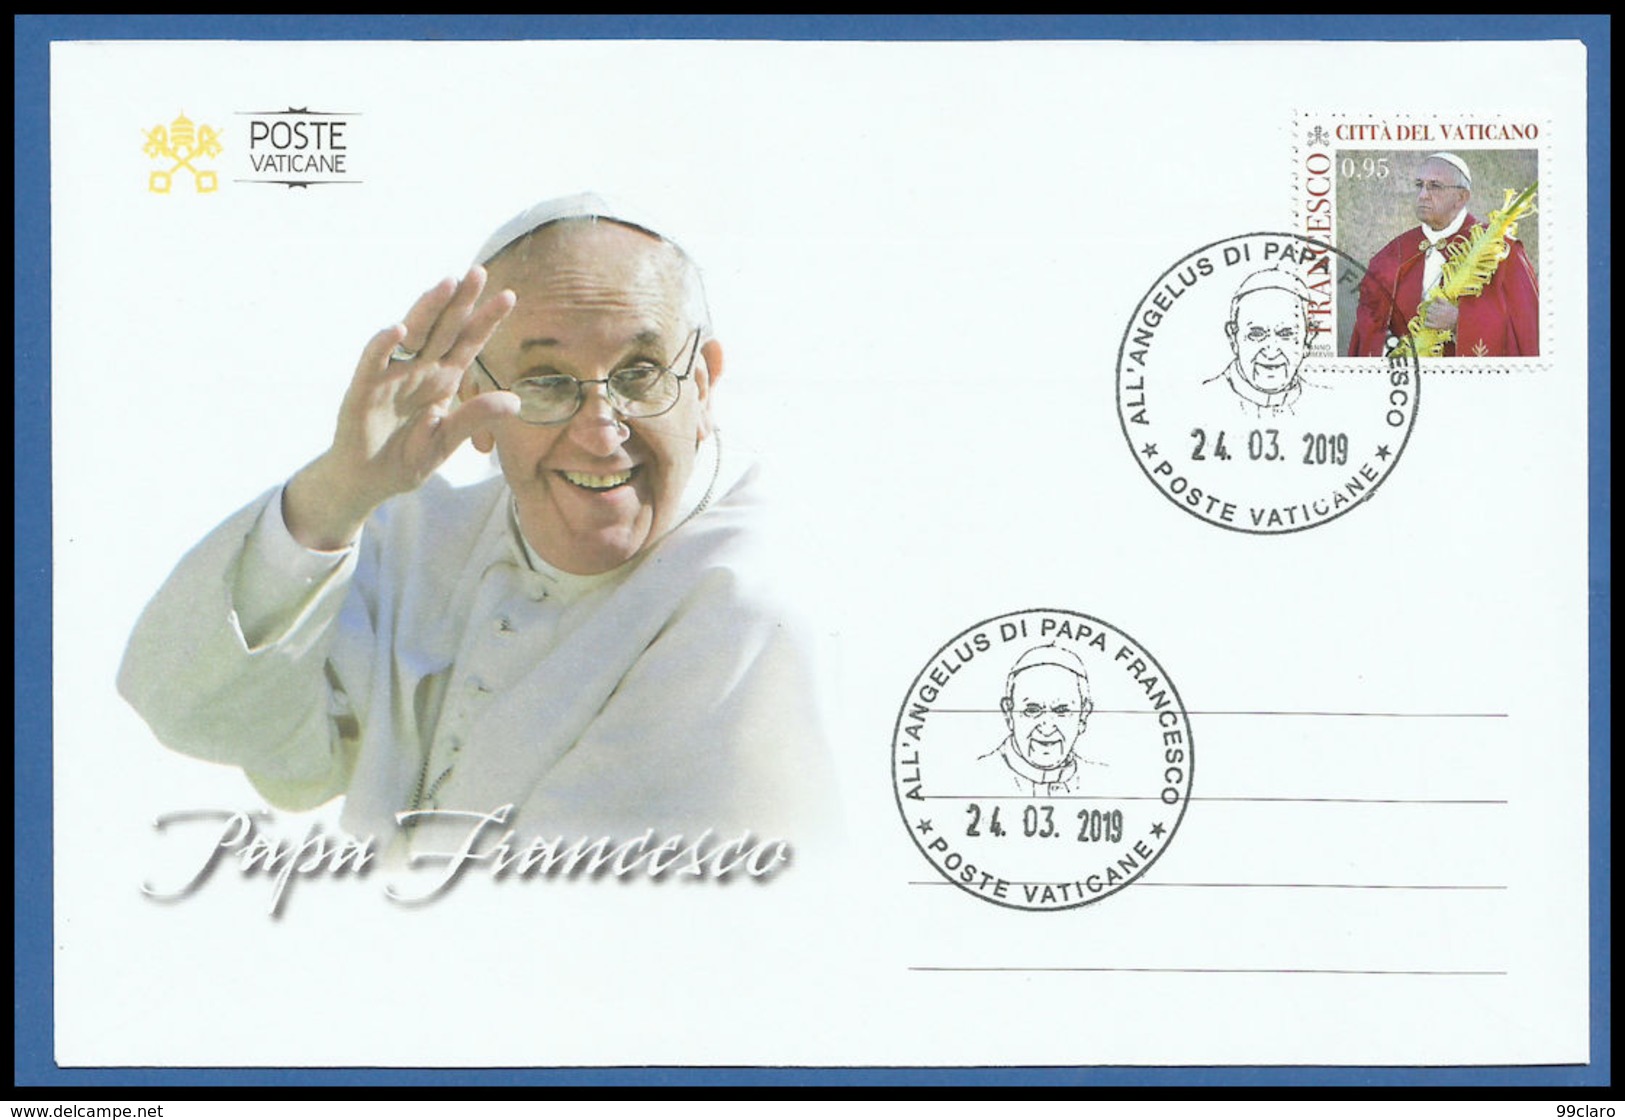 VATICANO VATICAN 2019 FDC POPE FRANCIS ANGELUS AUDIENCE IN S. PETER 24.03.19 ANGELUS PIAZZA SAN PIETRO - Storia Postale